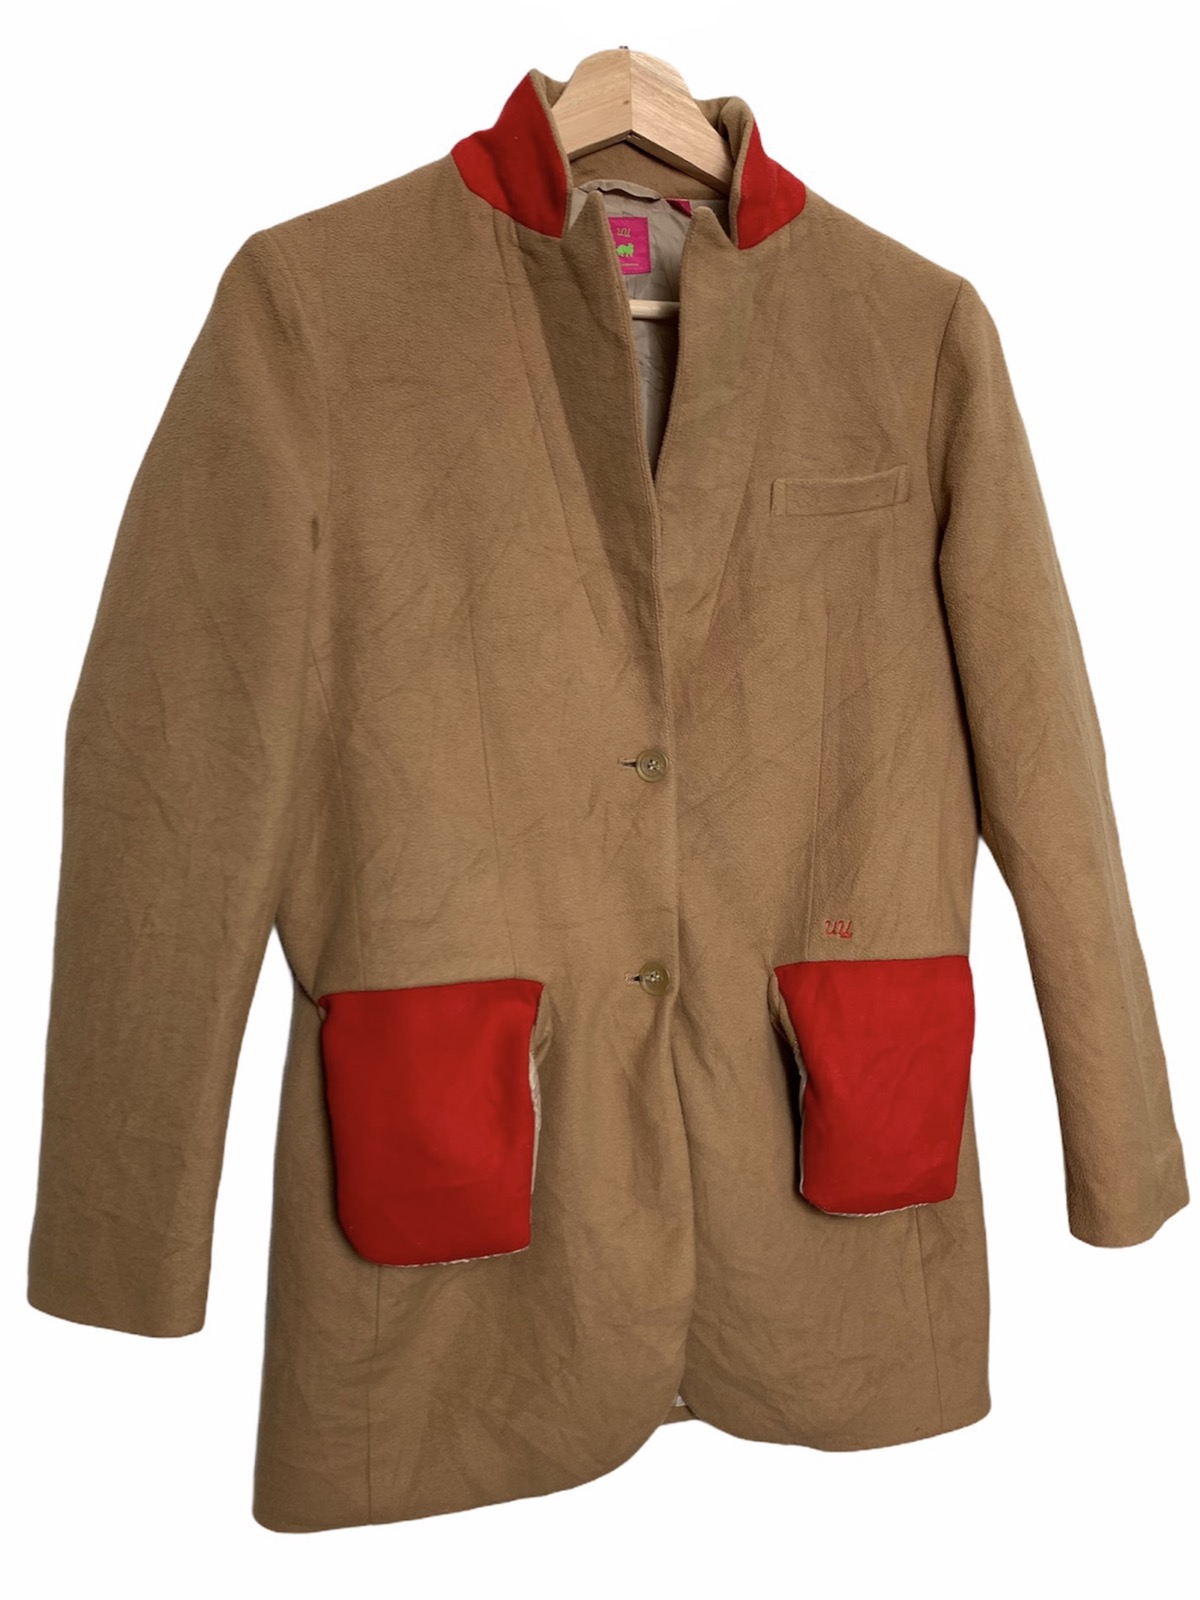 Uniqlo x Undercover Fleece Jacket/Coat - 3